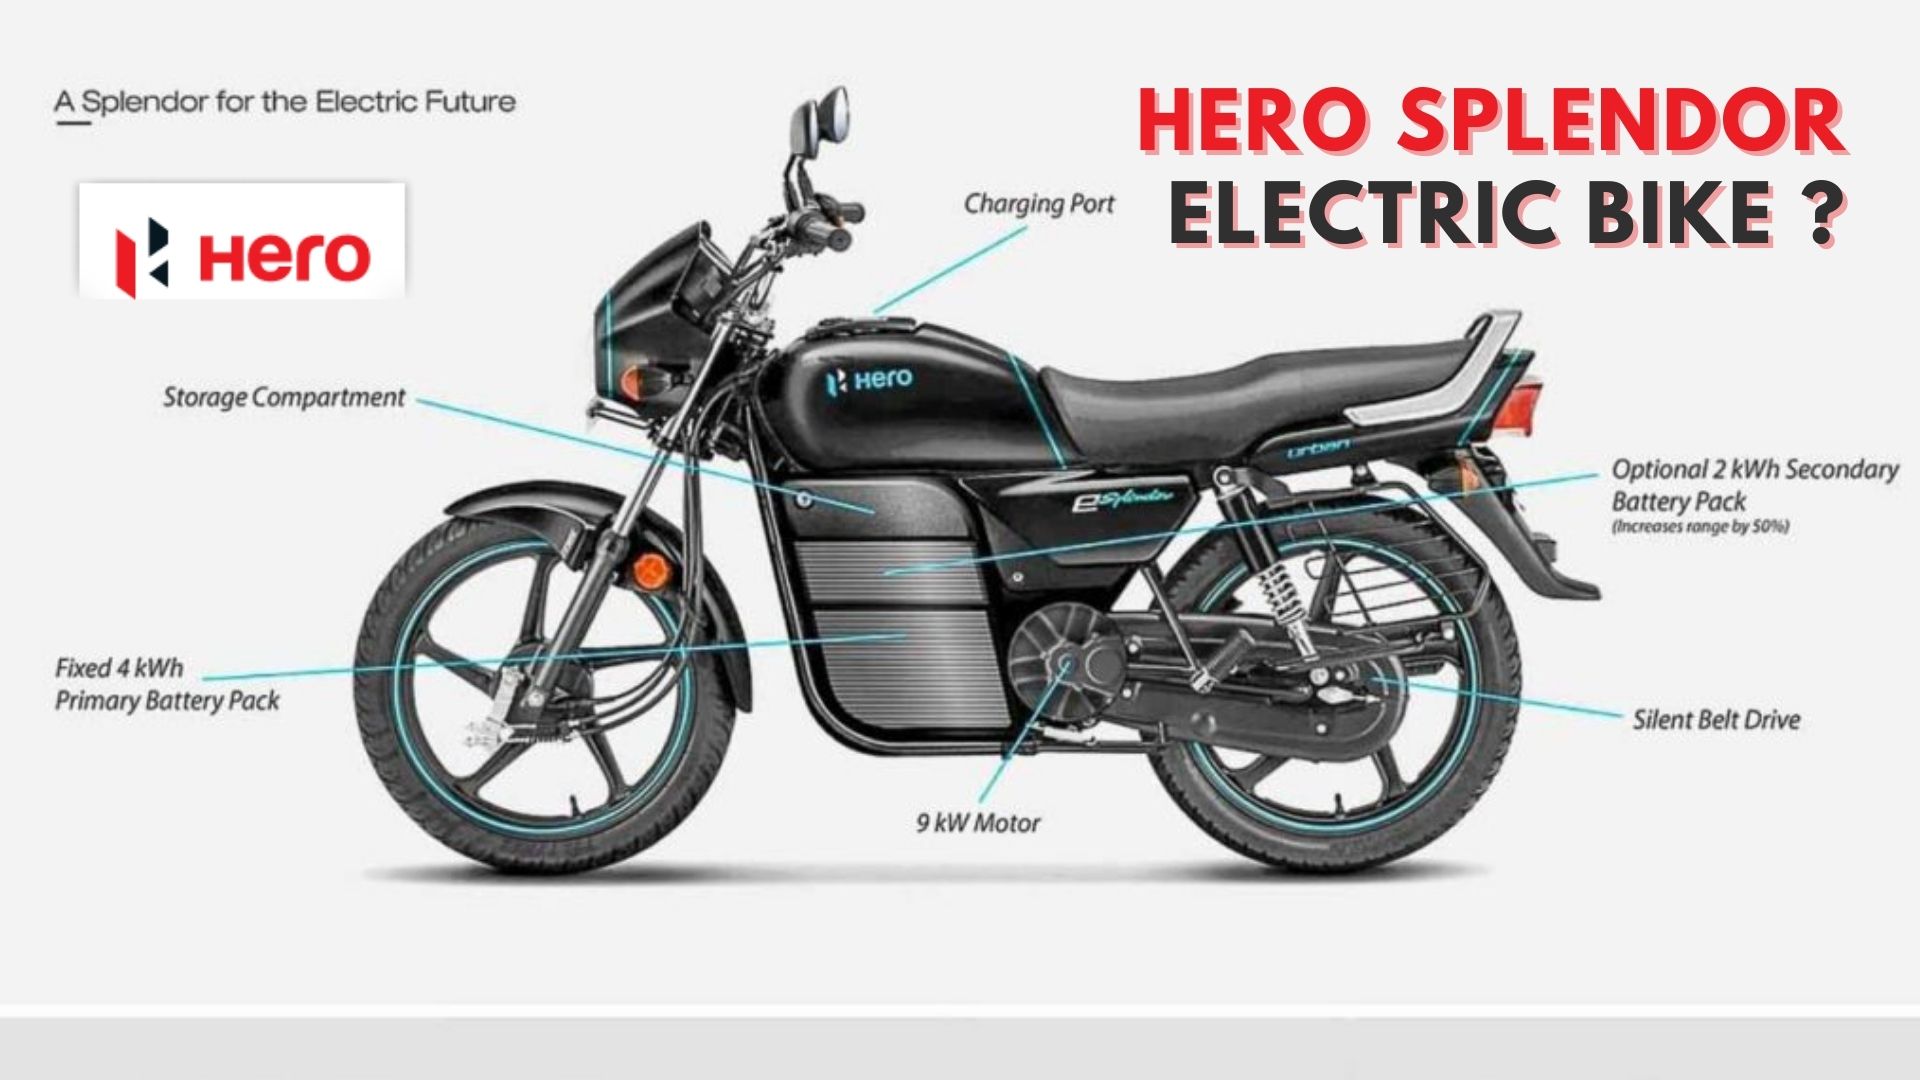 https://e-vehicleinfo.com/hindi/hero-splendor-electric-bike-price-and-launch/